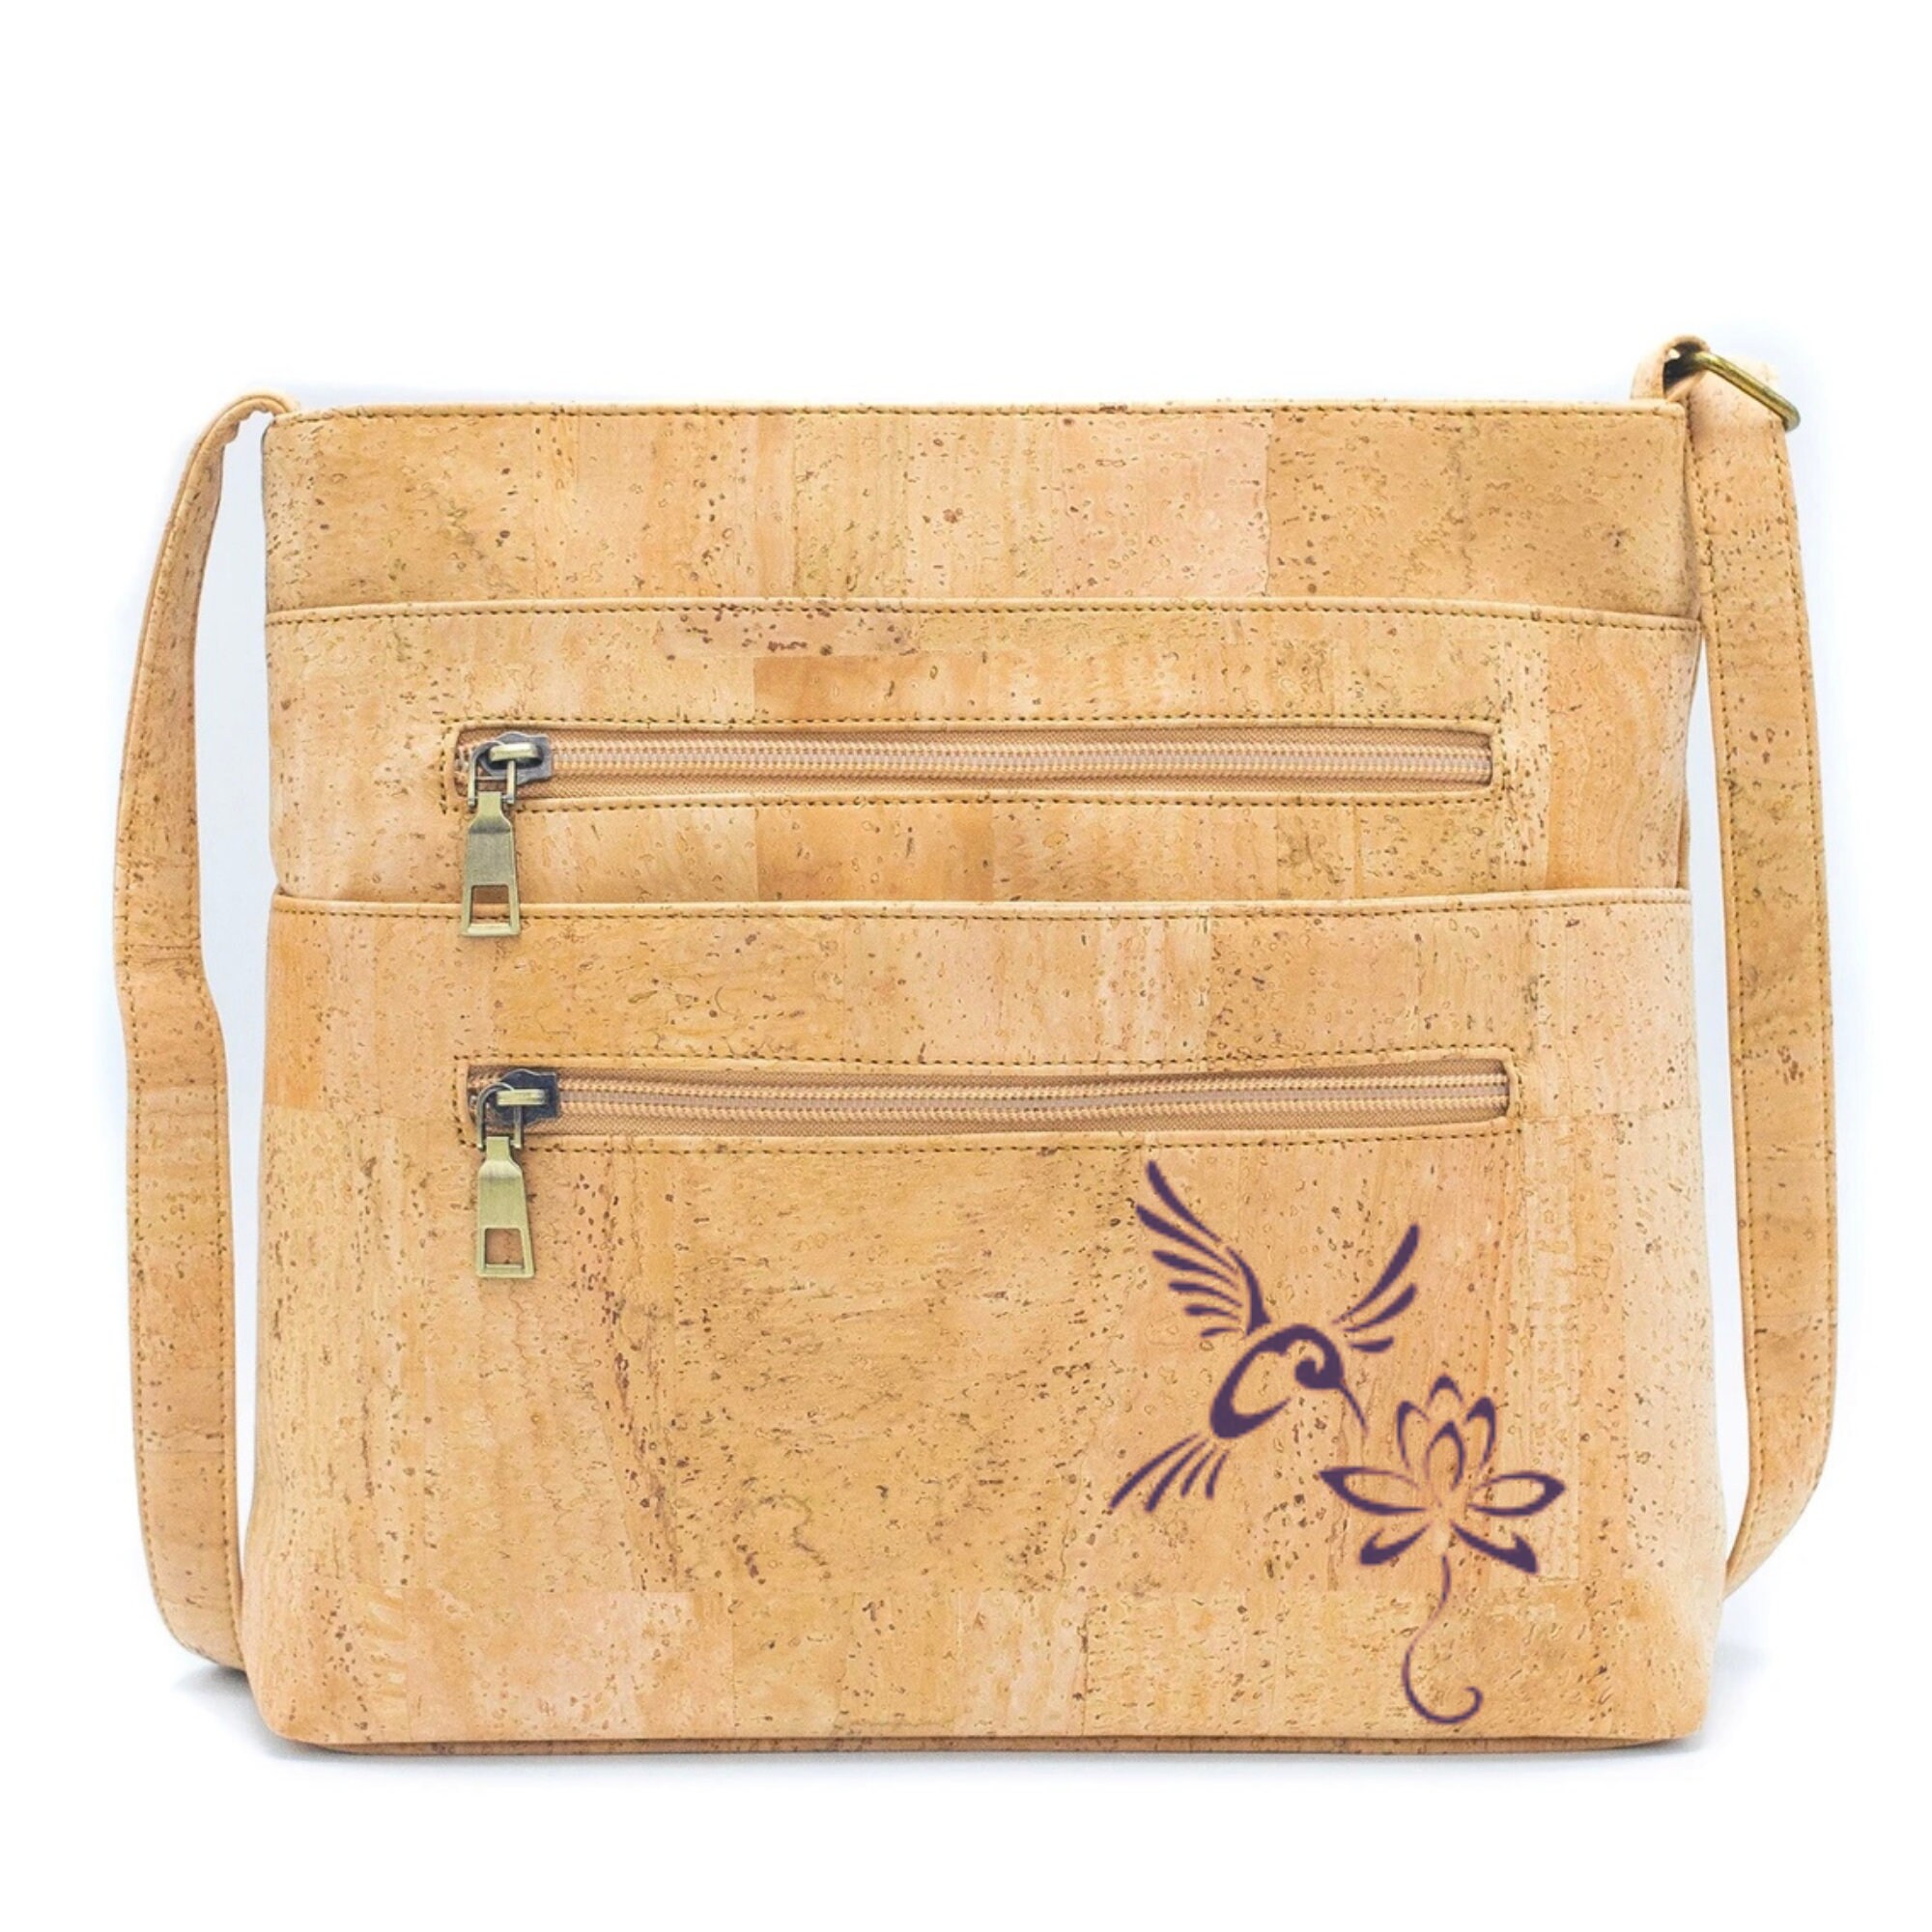 A8-3 Zip Crossbody Cork Handbag in Teal and Spring Flower Pattern – Sew  Corky